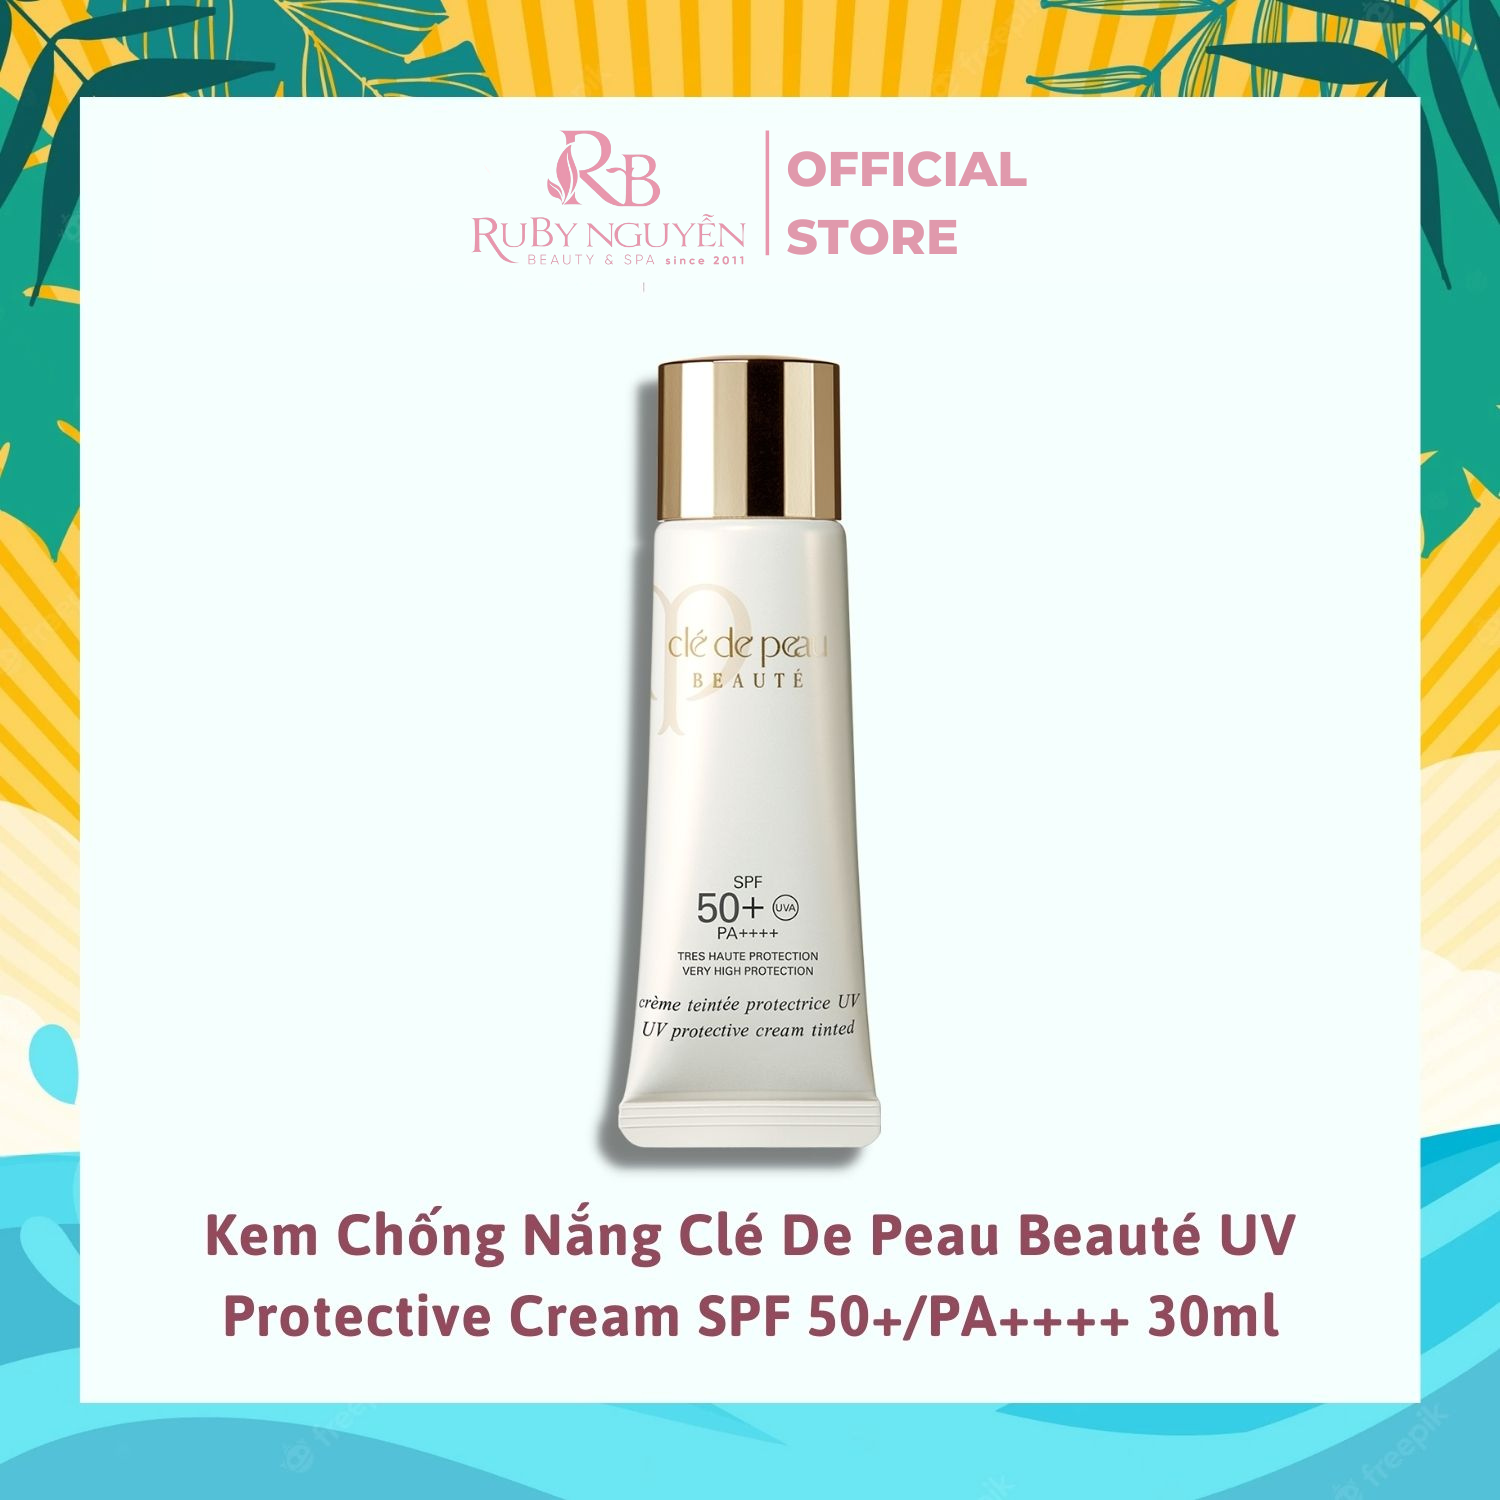 Kem Chống Nắng Clé De Peau Beauté UV Protective Cream SPF 50+ PA++++ 30ml